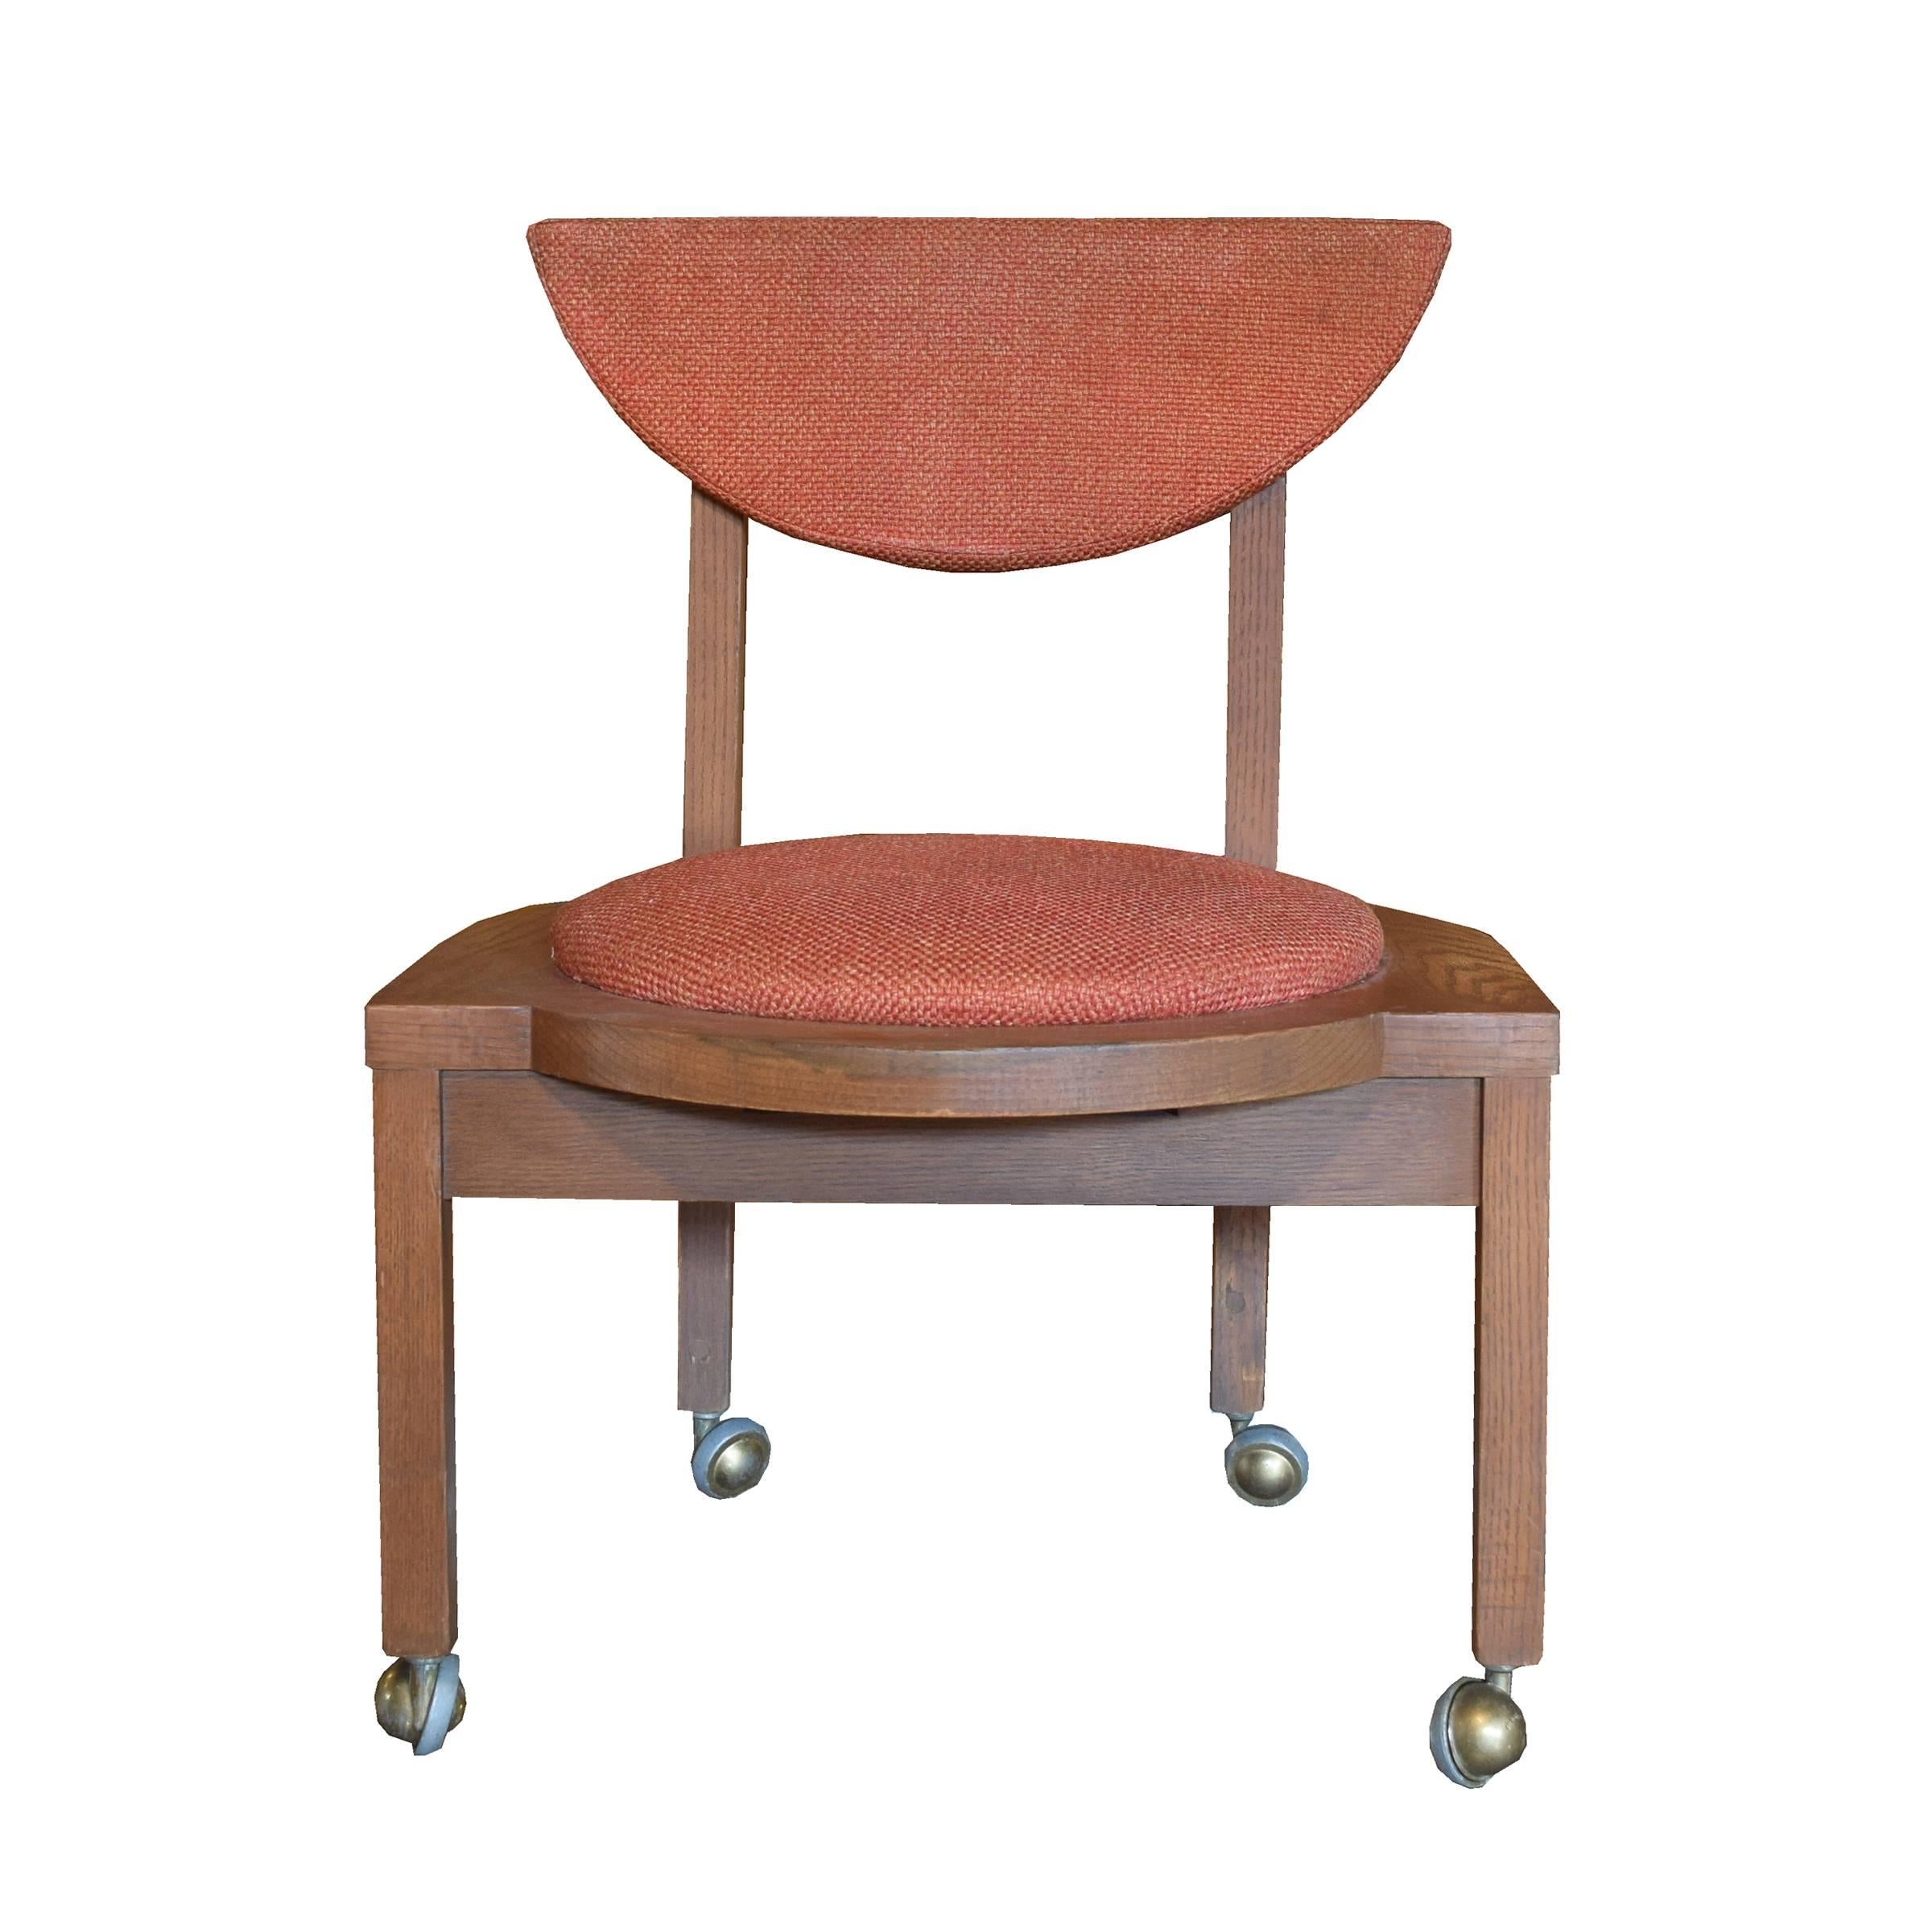 Prairie School Pair of Frank Lloyd Wright Designed Side Chairs, 1953